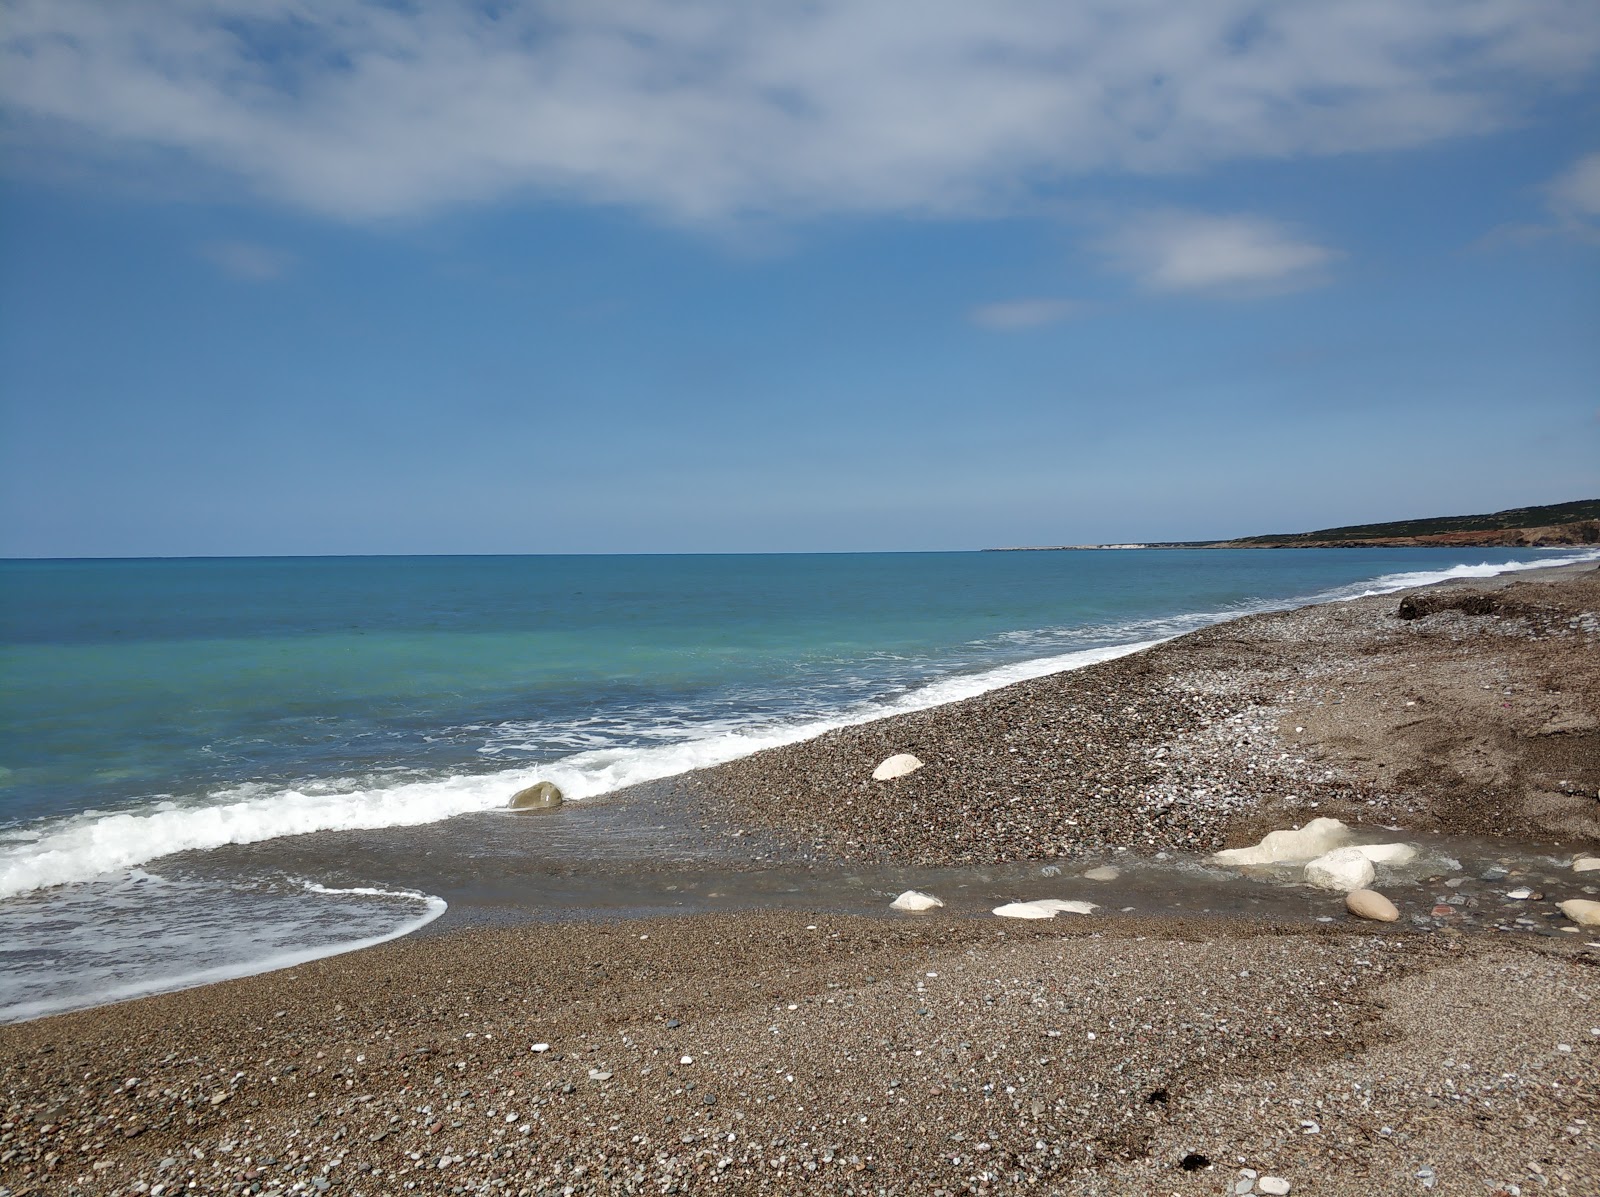 Photo de Toxeftra beach II situé dans une zone naturelle